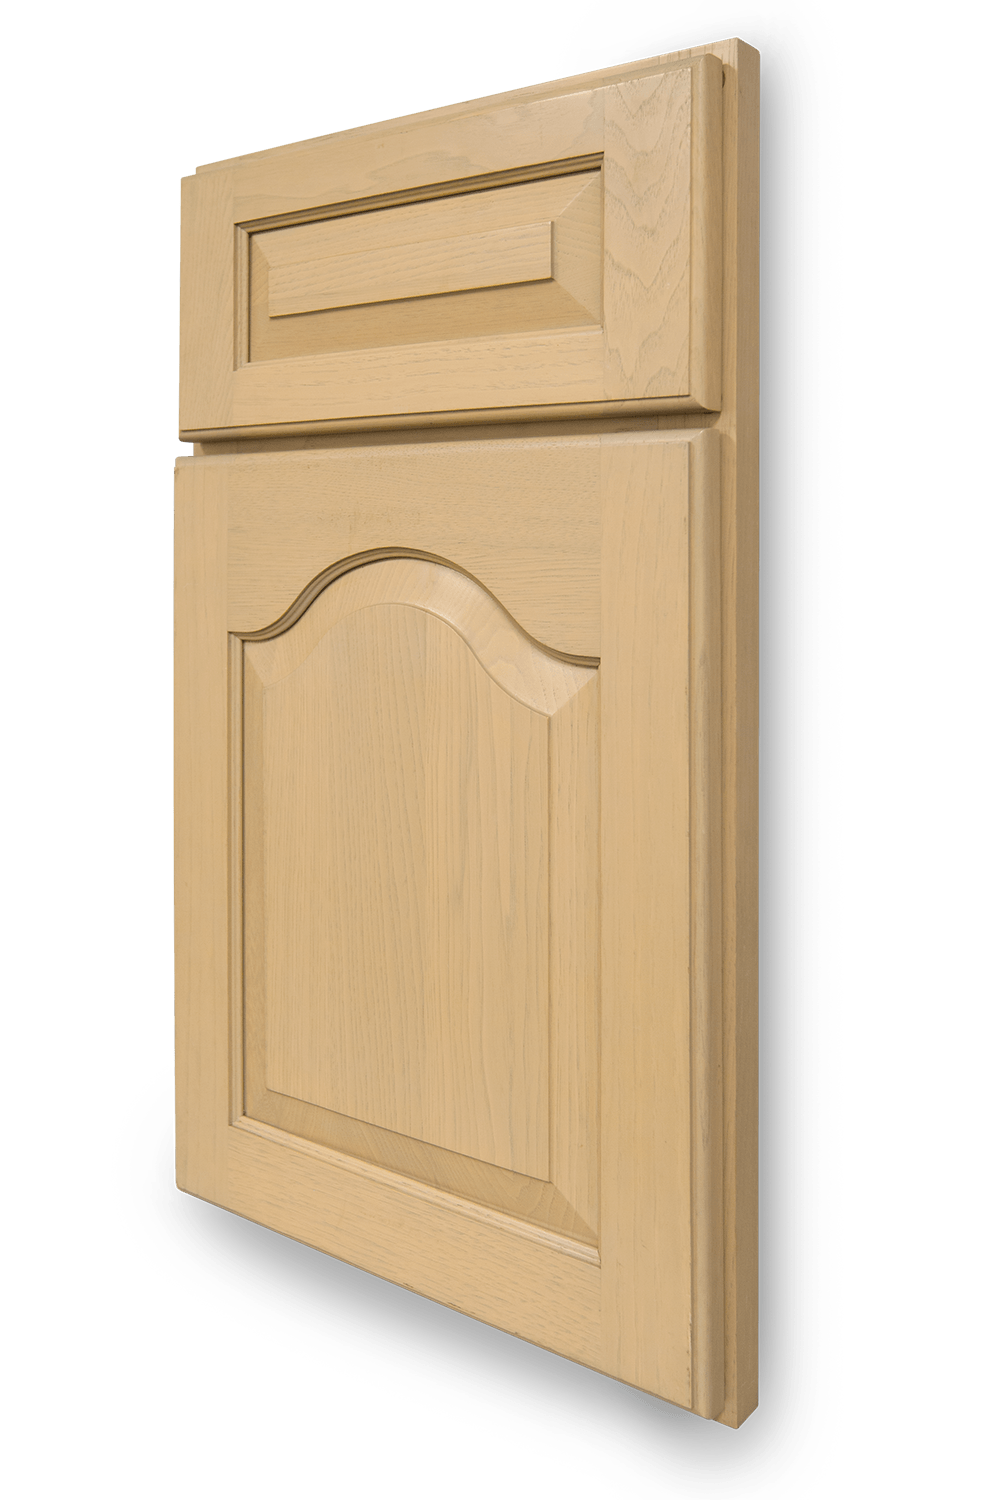 Standard Overlay Cabinet